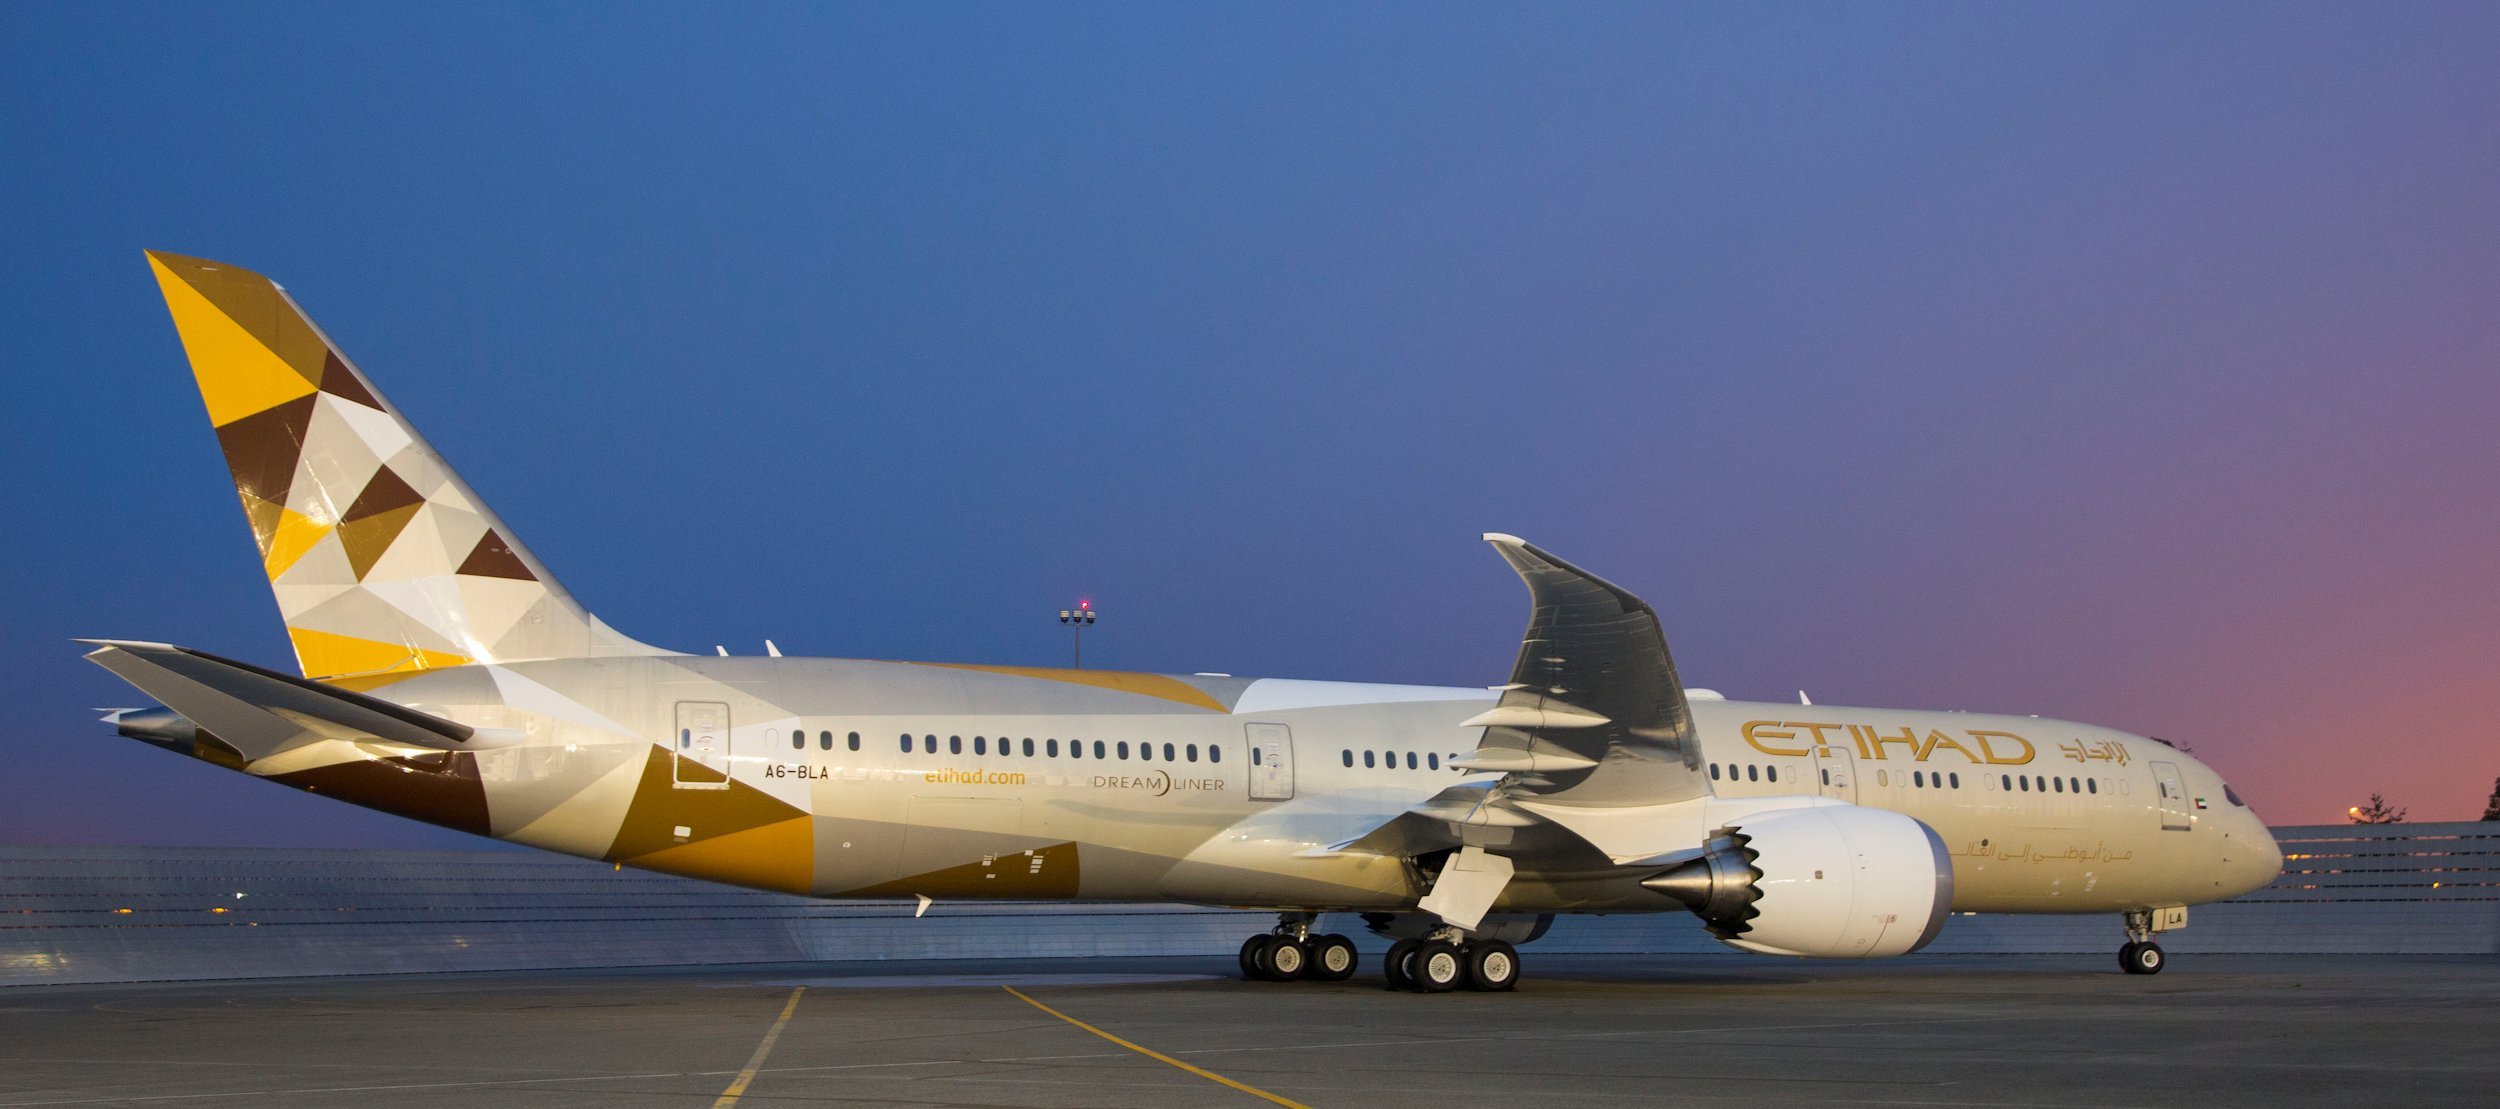 Etihad Airways Launches First B787 Dreamliner Flight - Gulf Business2500 x 1109